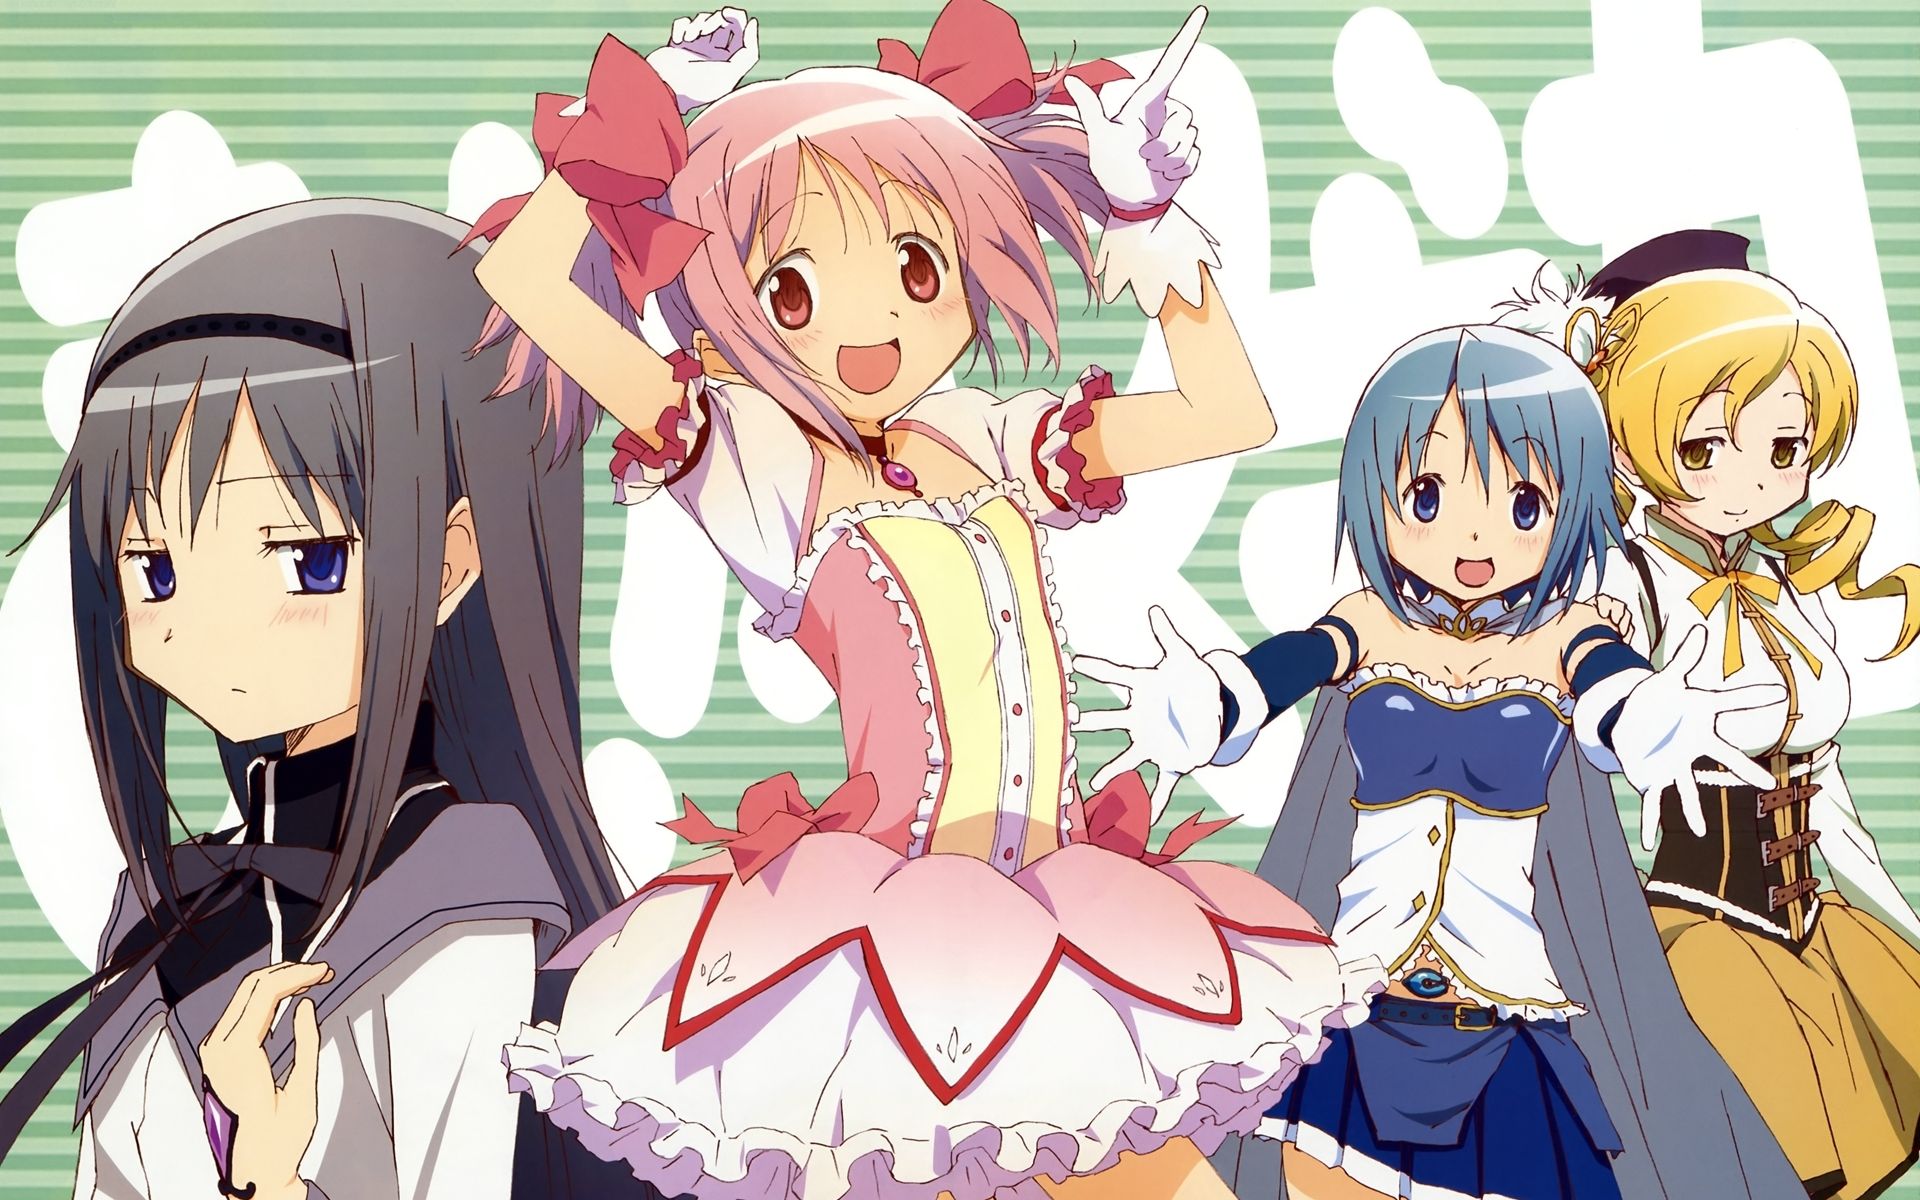 Mahou Shoujo Madoka Magica, Miki Sayaka, Tomoe Mami, Kaname Madoka, Akemi Homura - desktop wallpaper